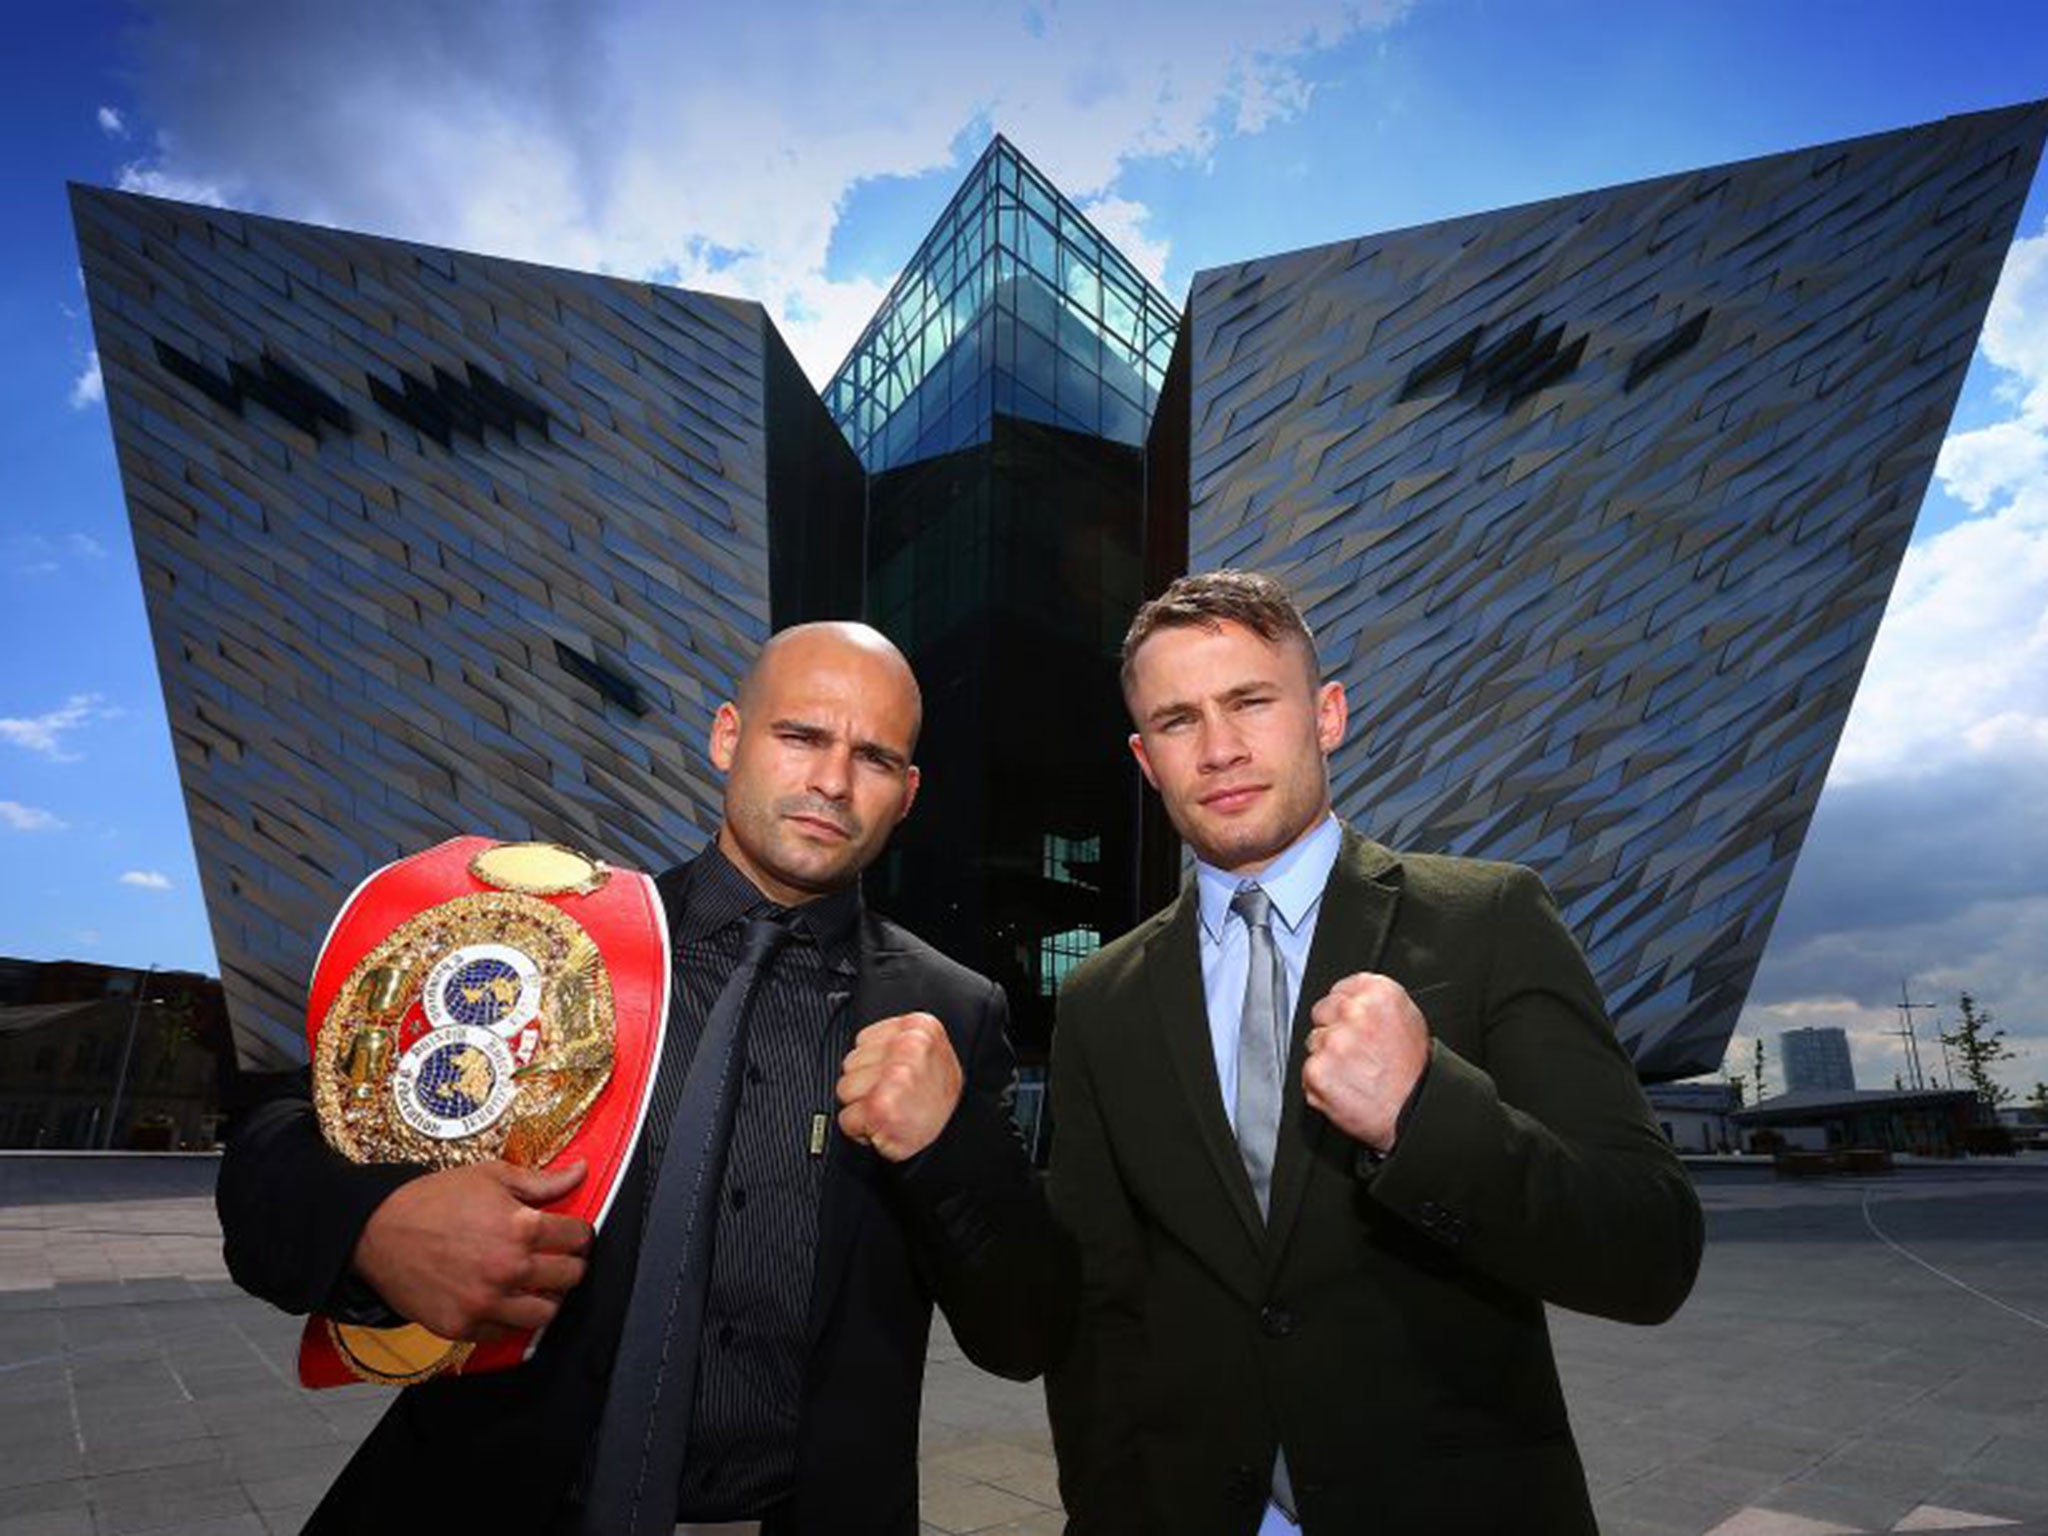 Carl Frampton (right) and Kiko Martinez will be fighting in Belfast’s Titanic Quarter on Saturday night